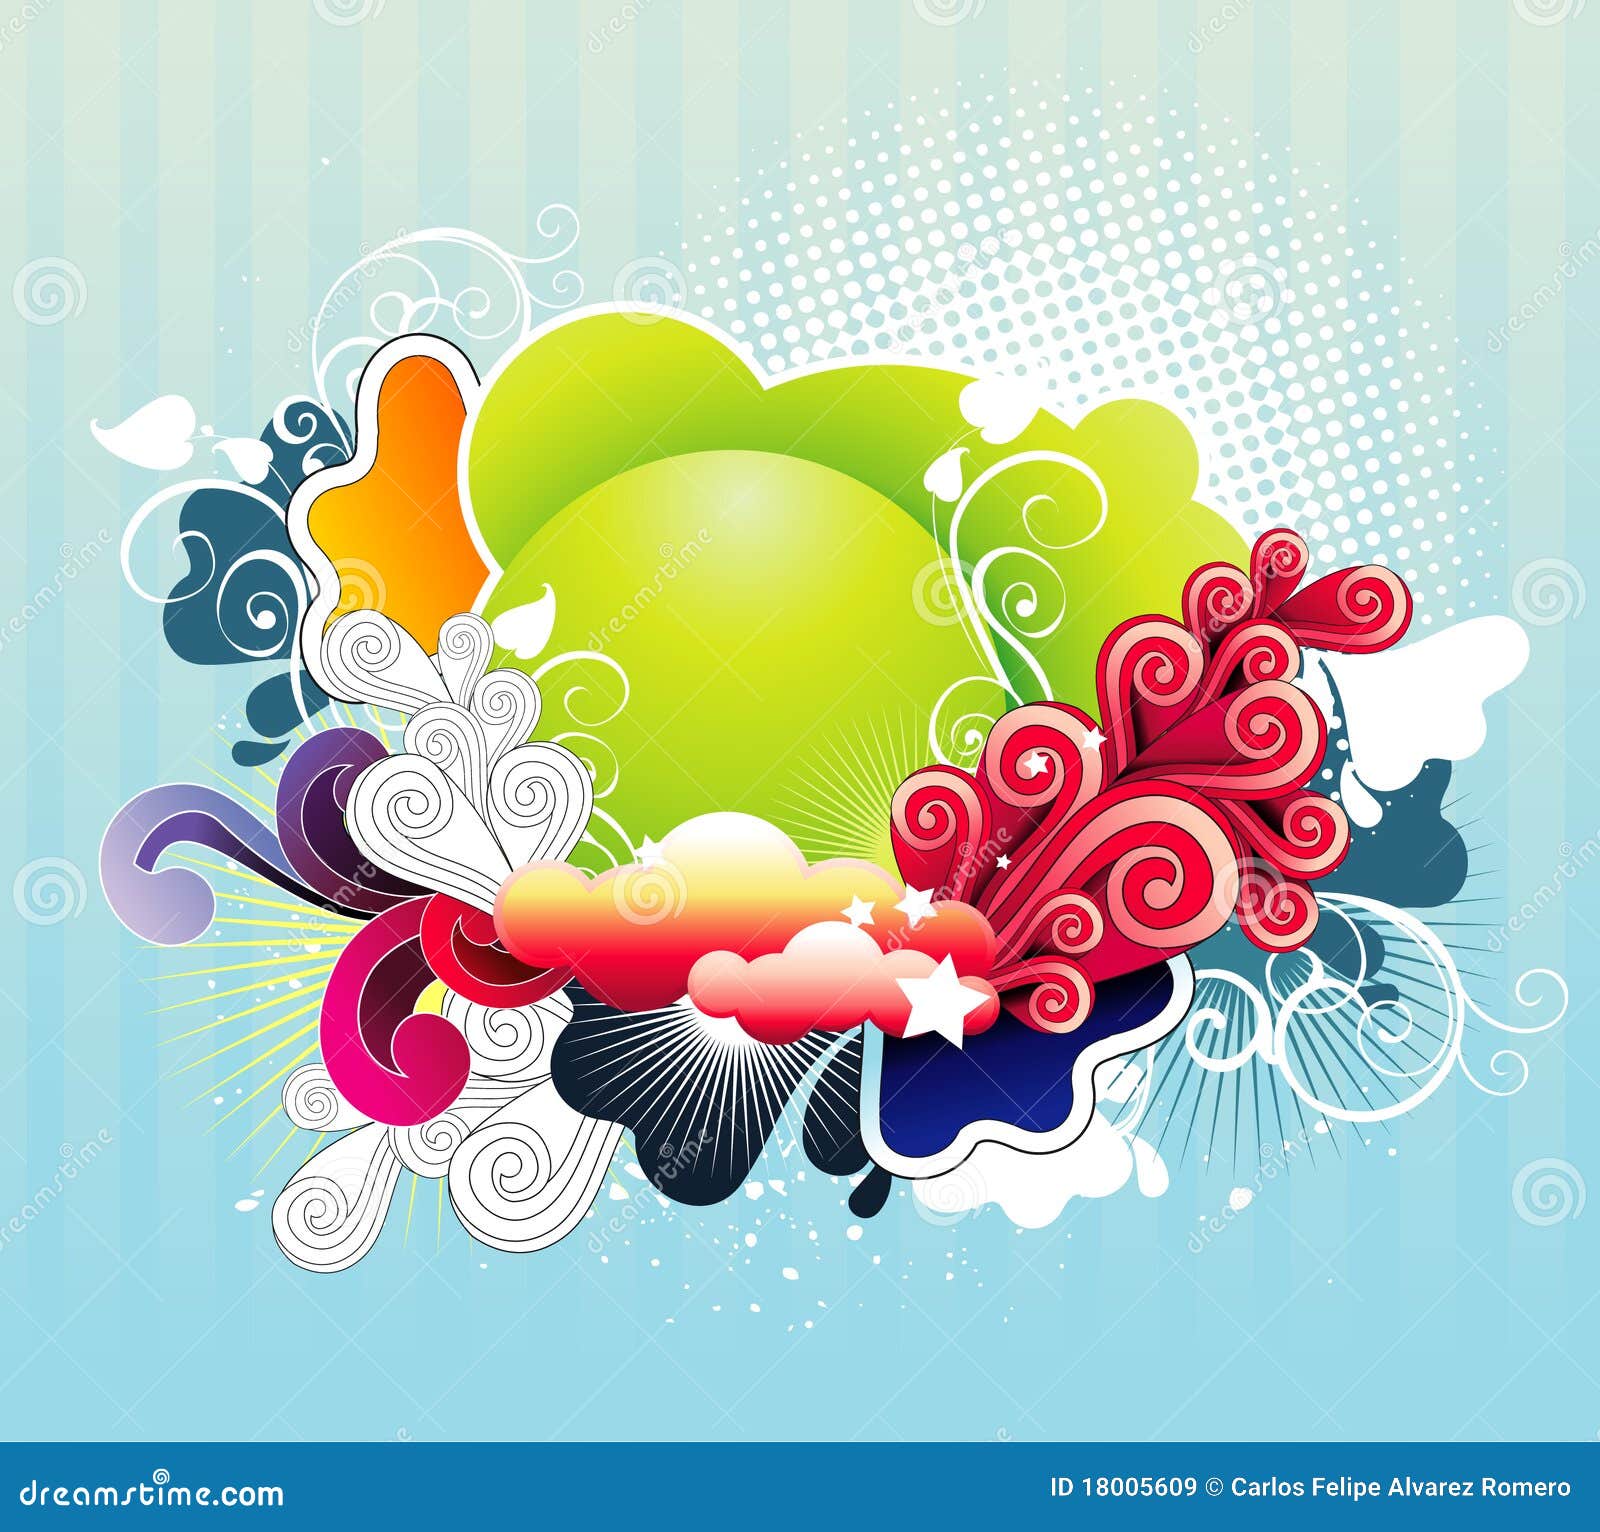 Abstract color fantasy stock vector. Illustration of fantasy - 18005609